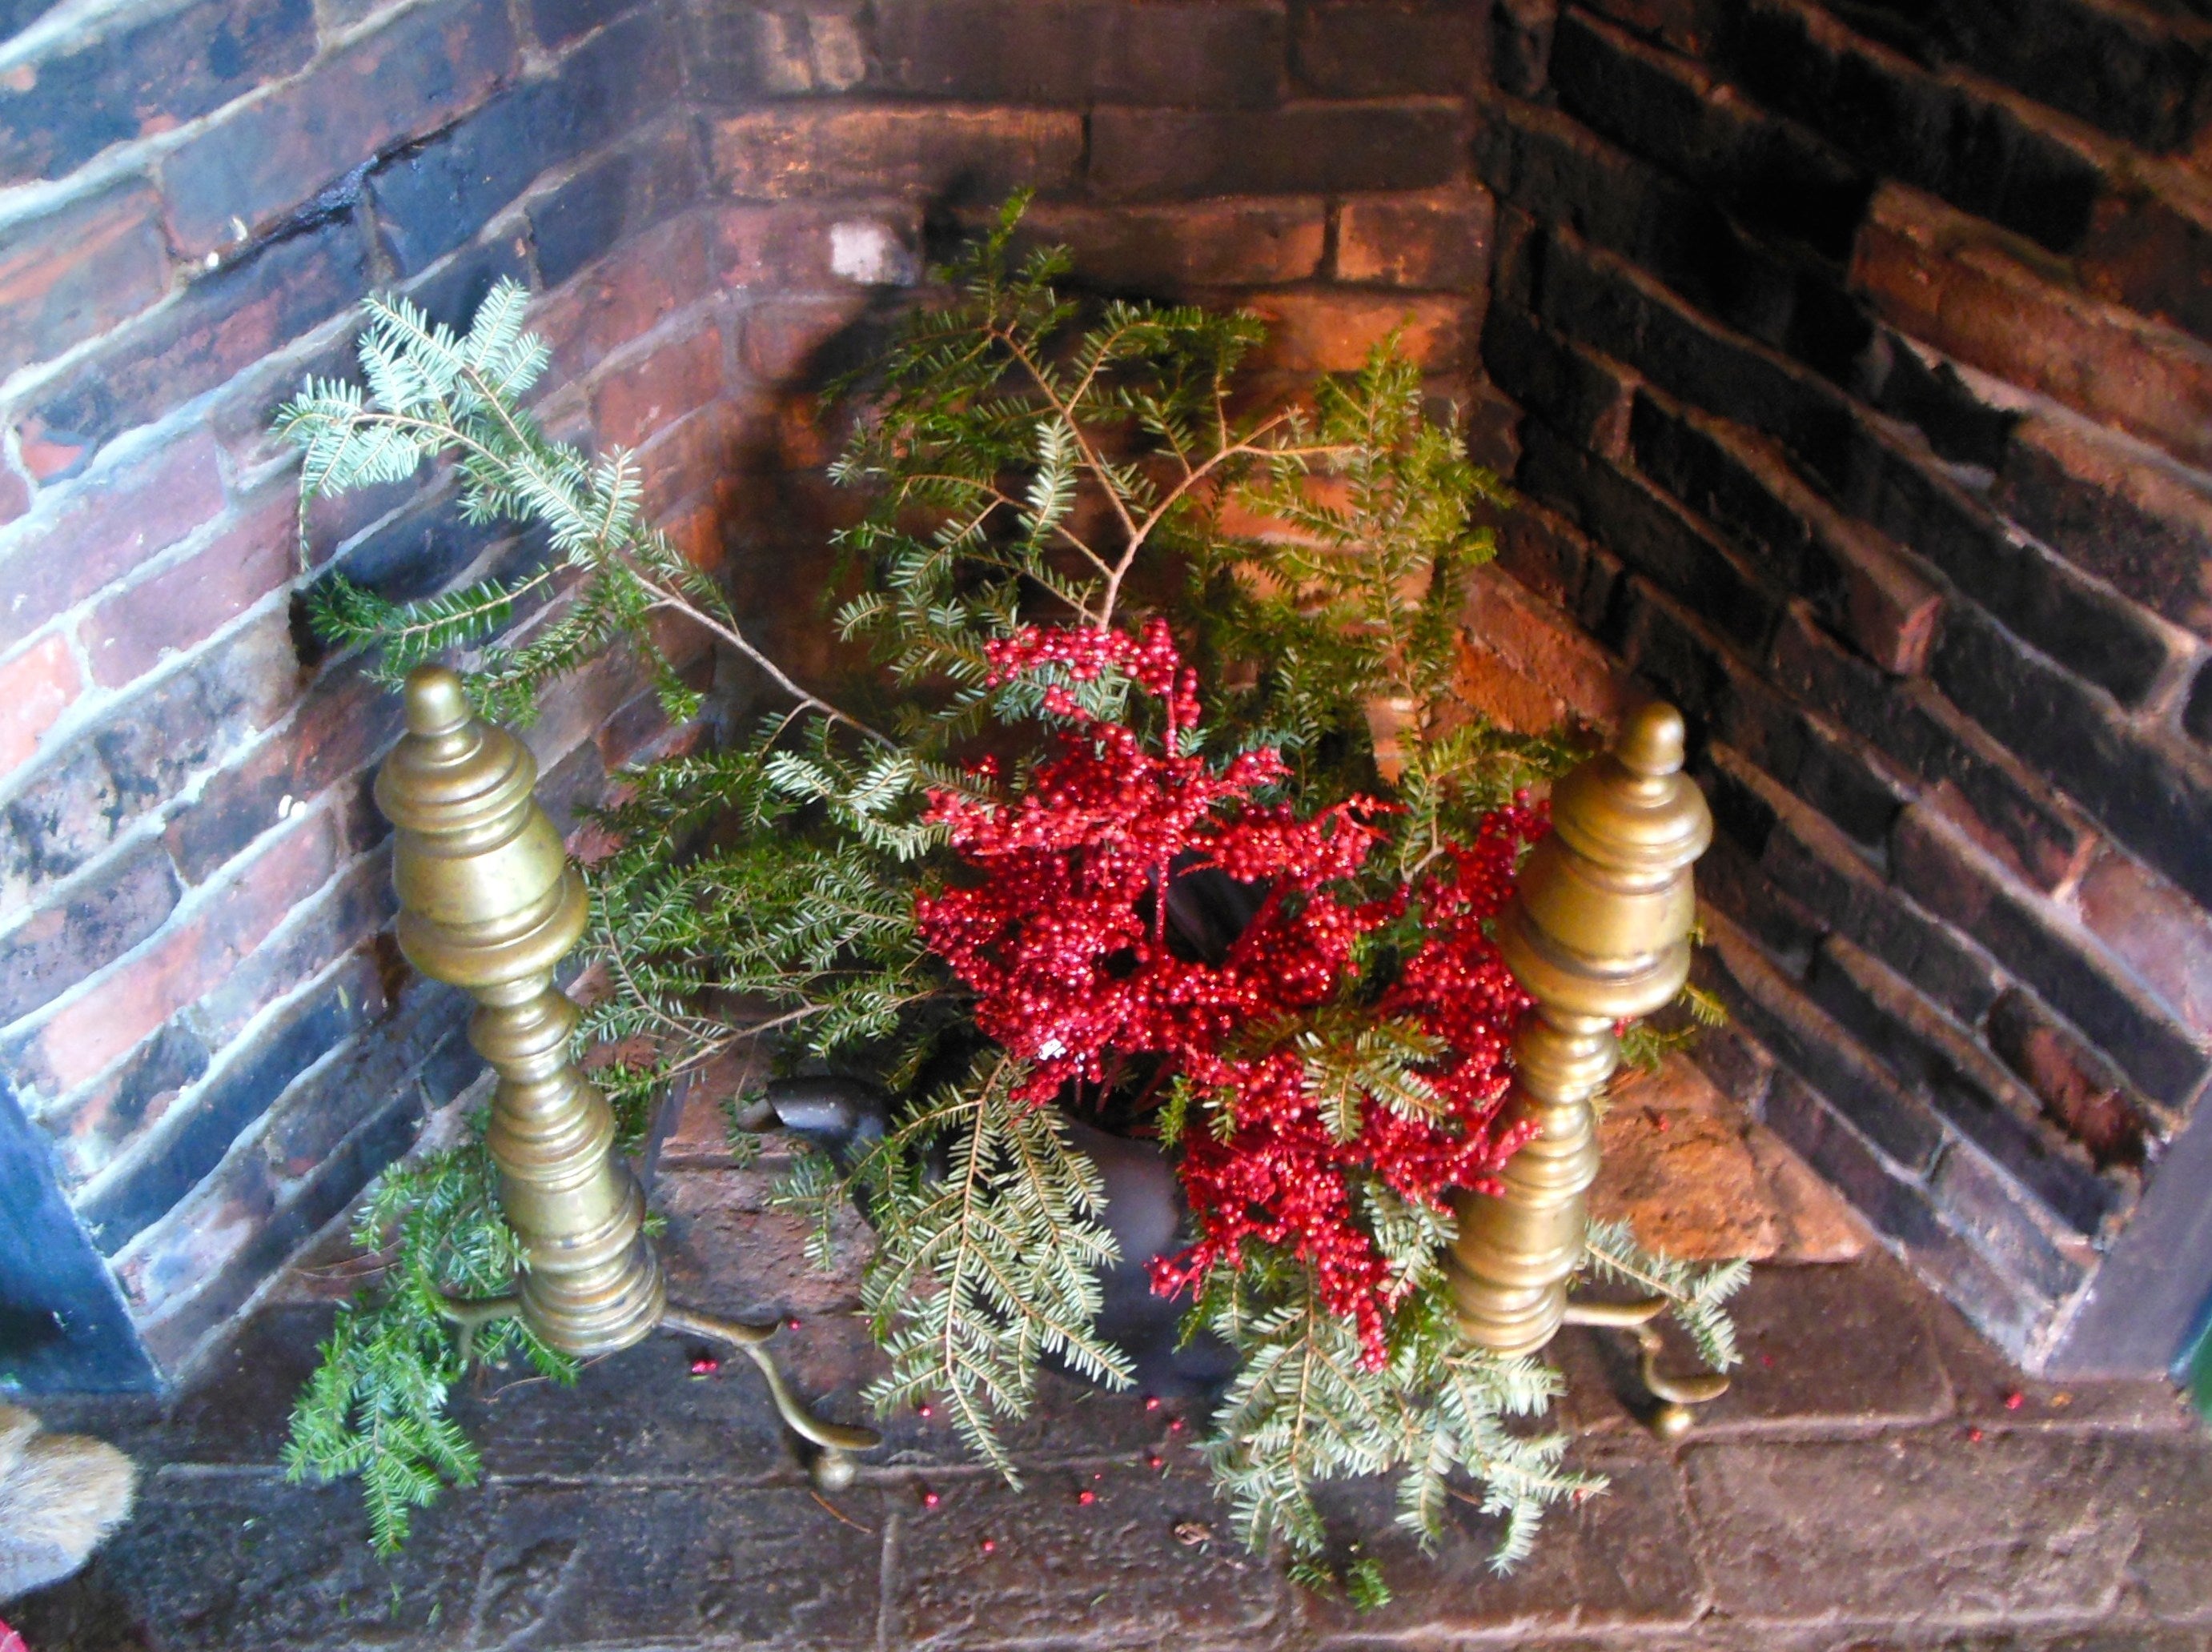 floral arrangement in fireplace